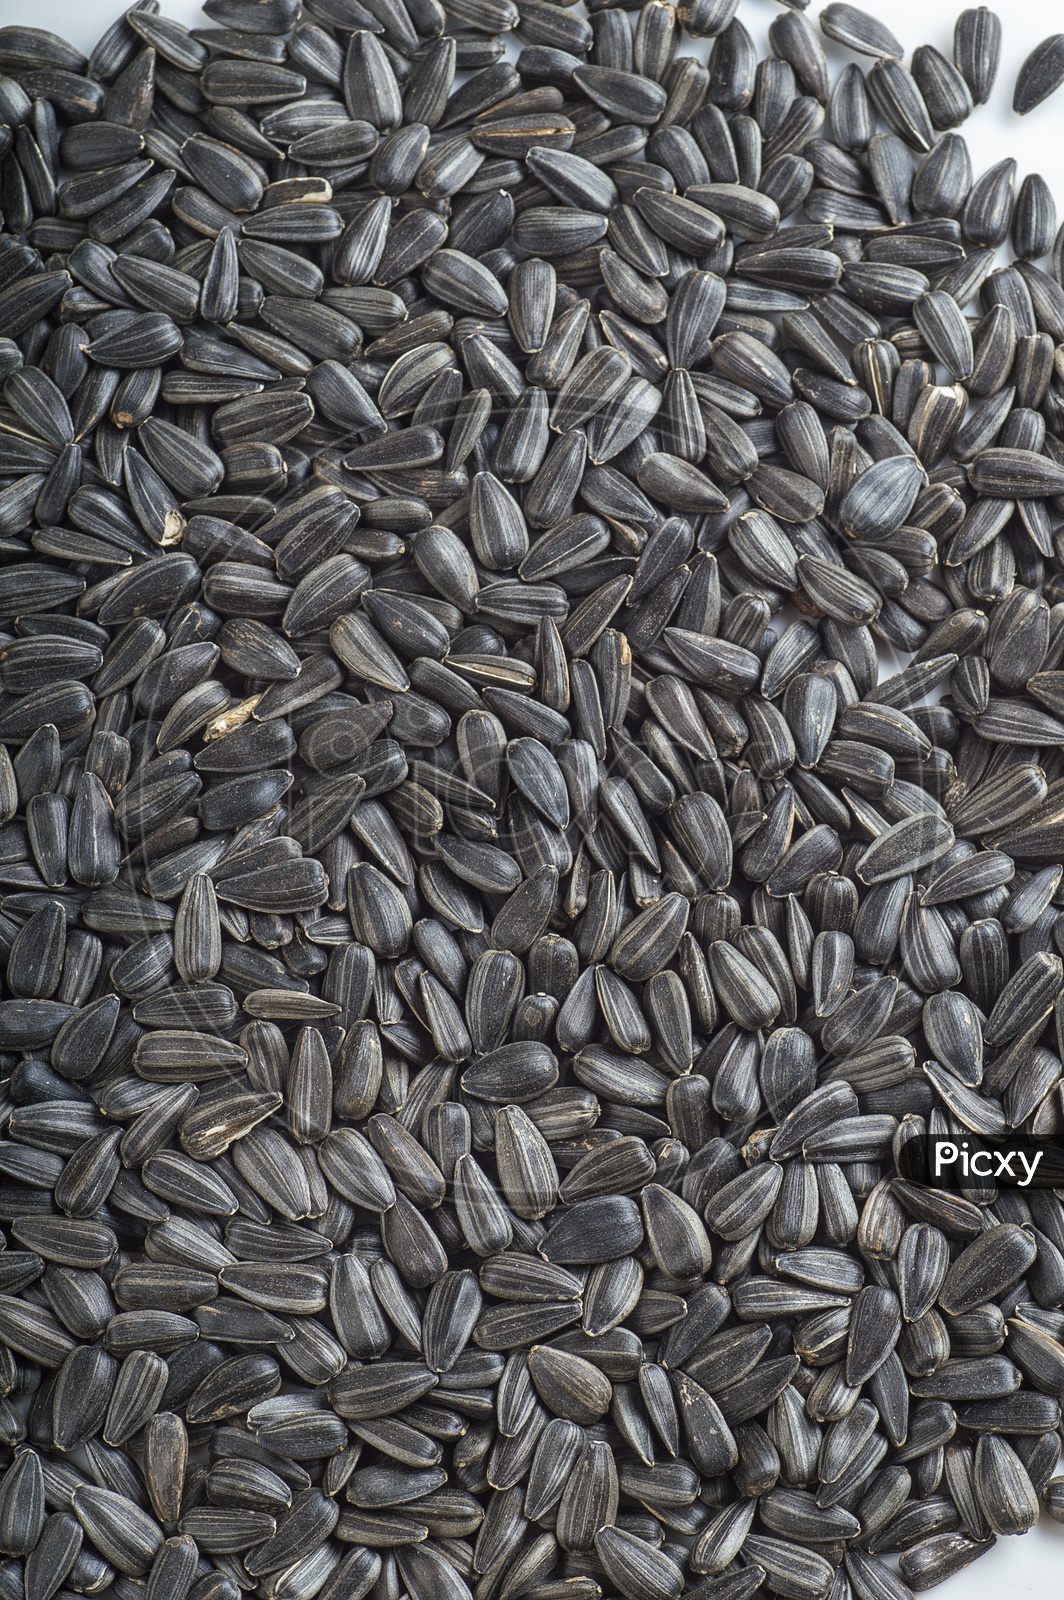 Bunch of Sunflower seeds